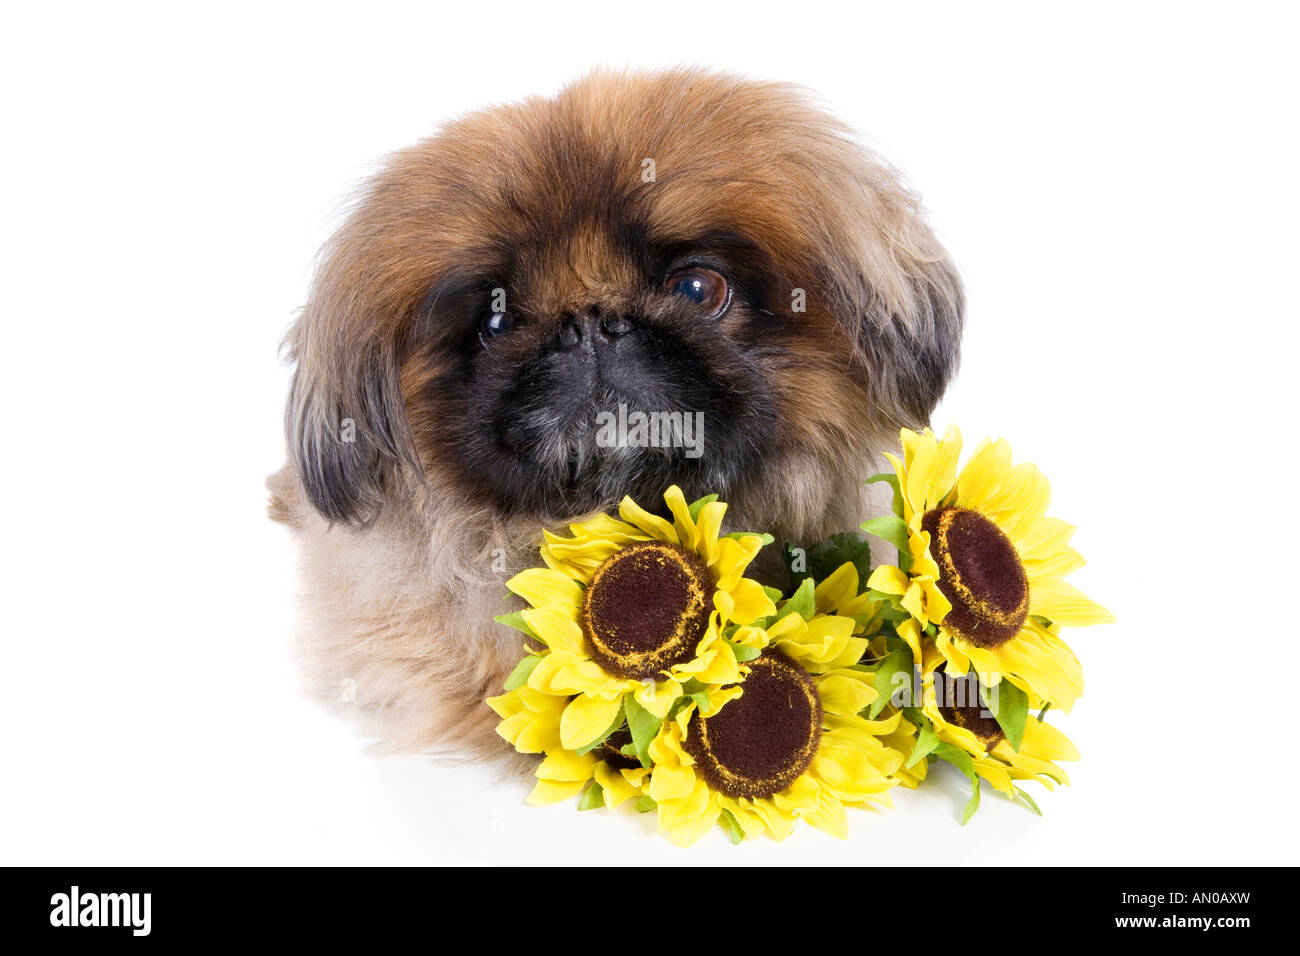 Pekingese dog with bouquet of yellow sunflowers isolated on white Stock Photo